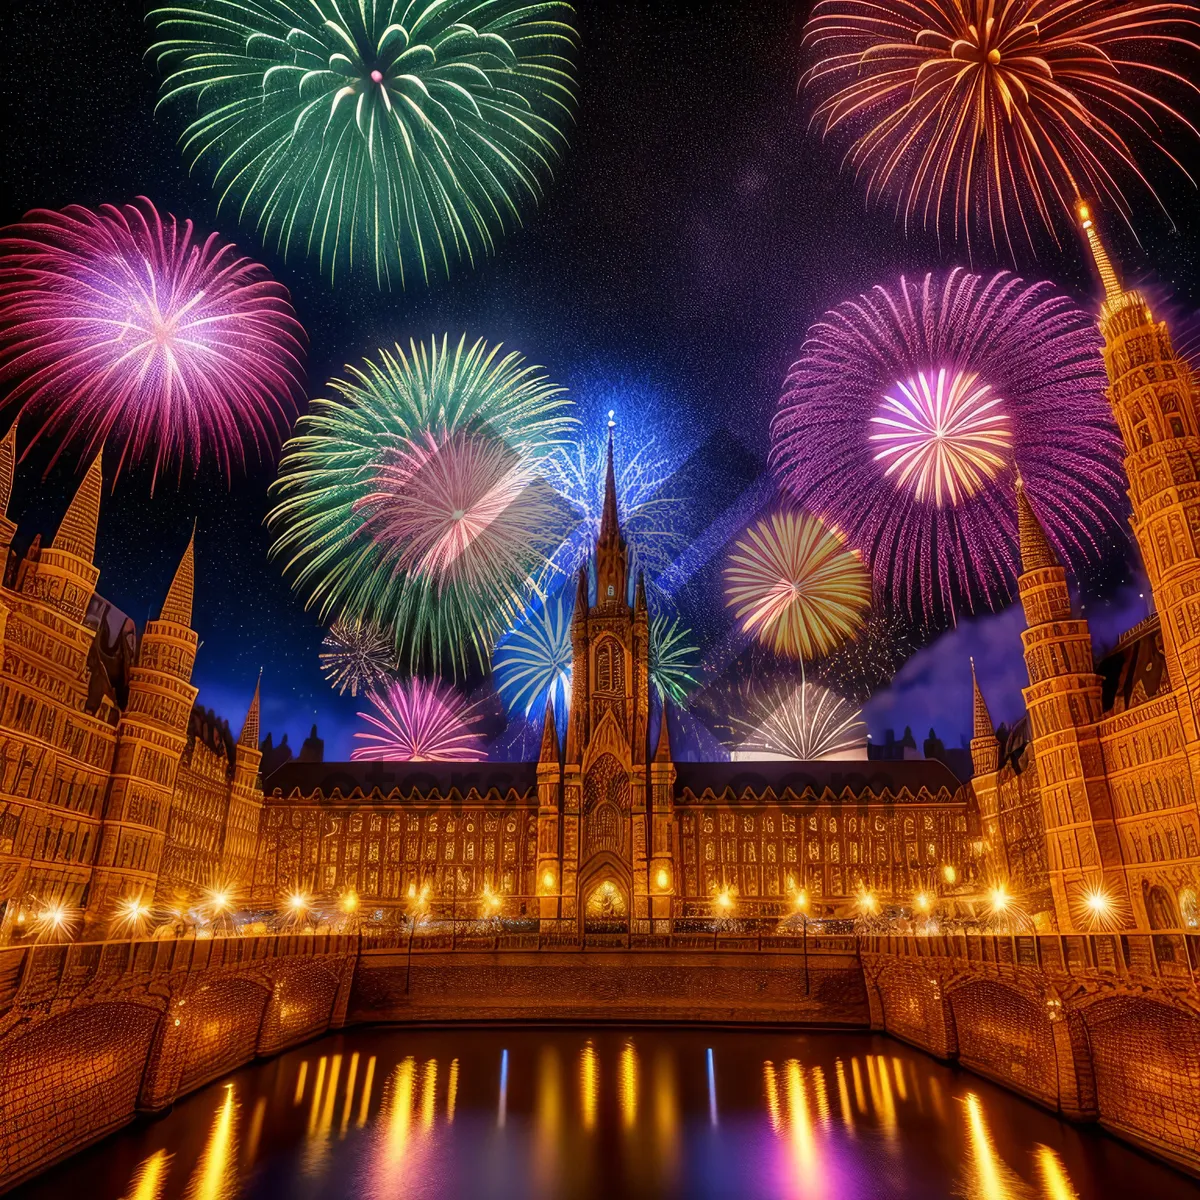 Picture of Vibrant Night Sky Fireworks Celebration